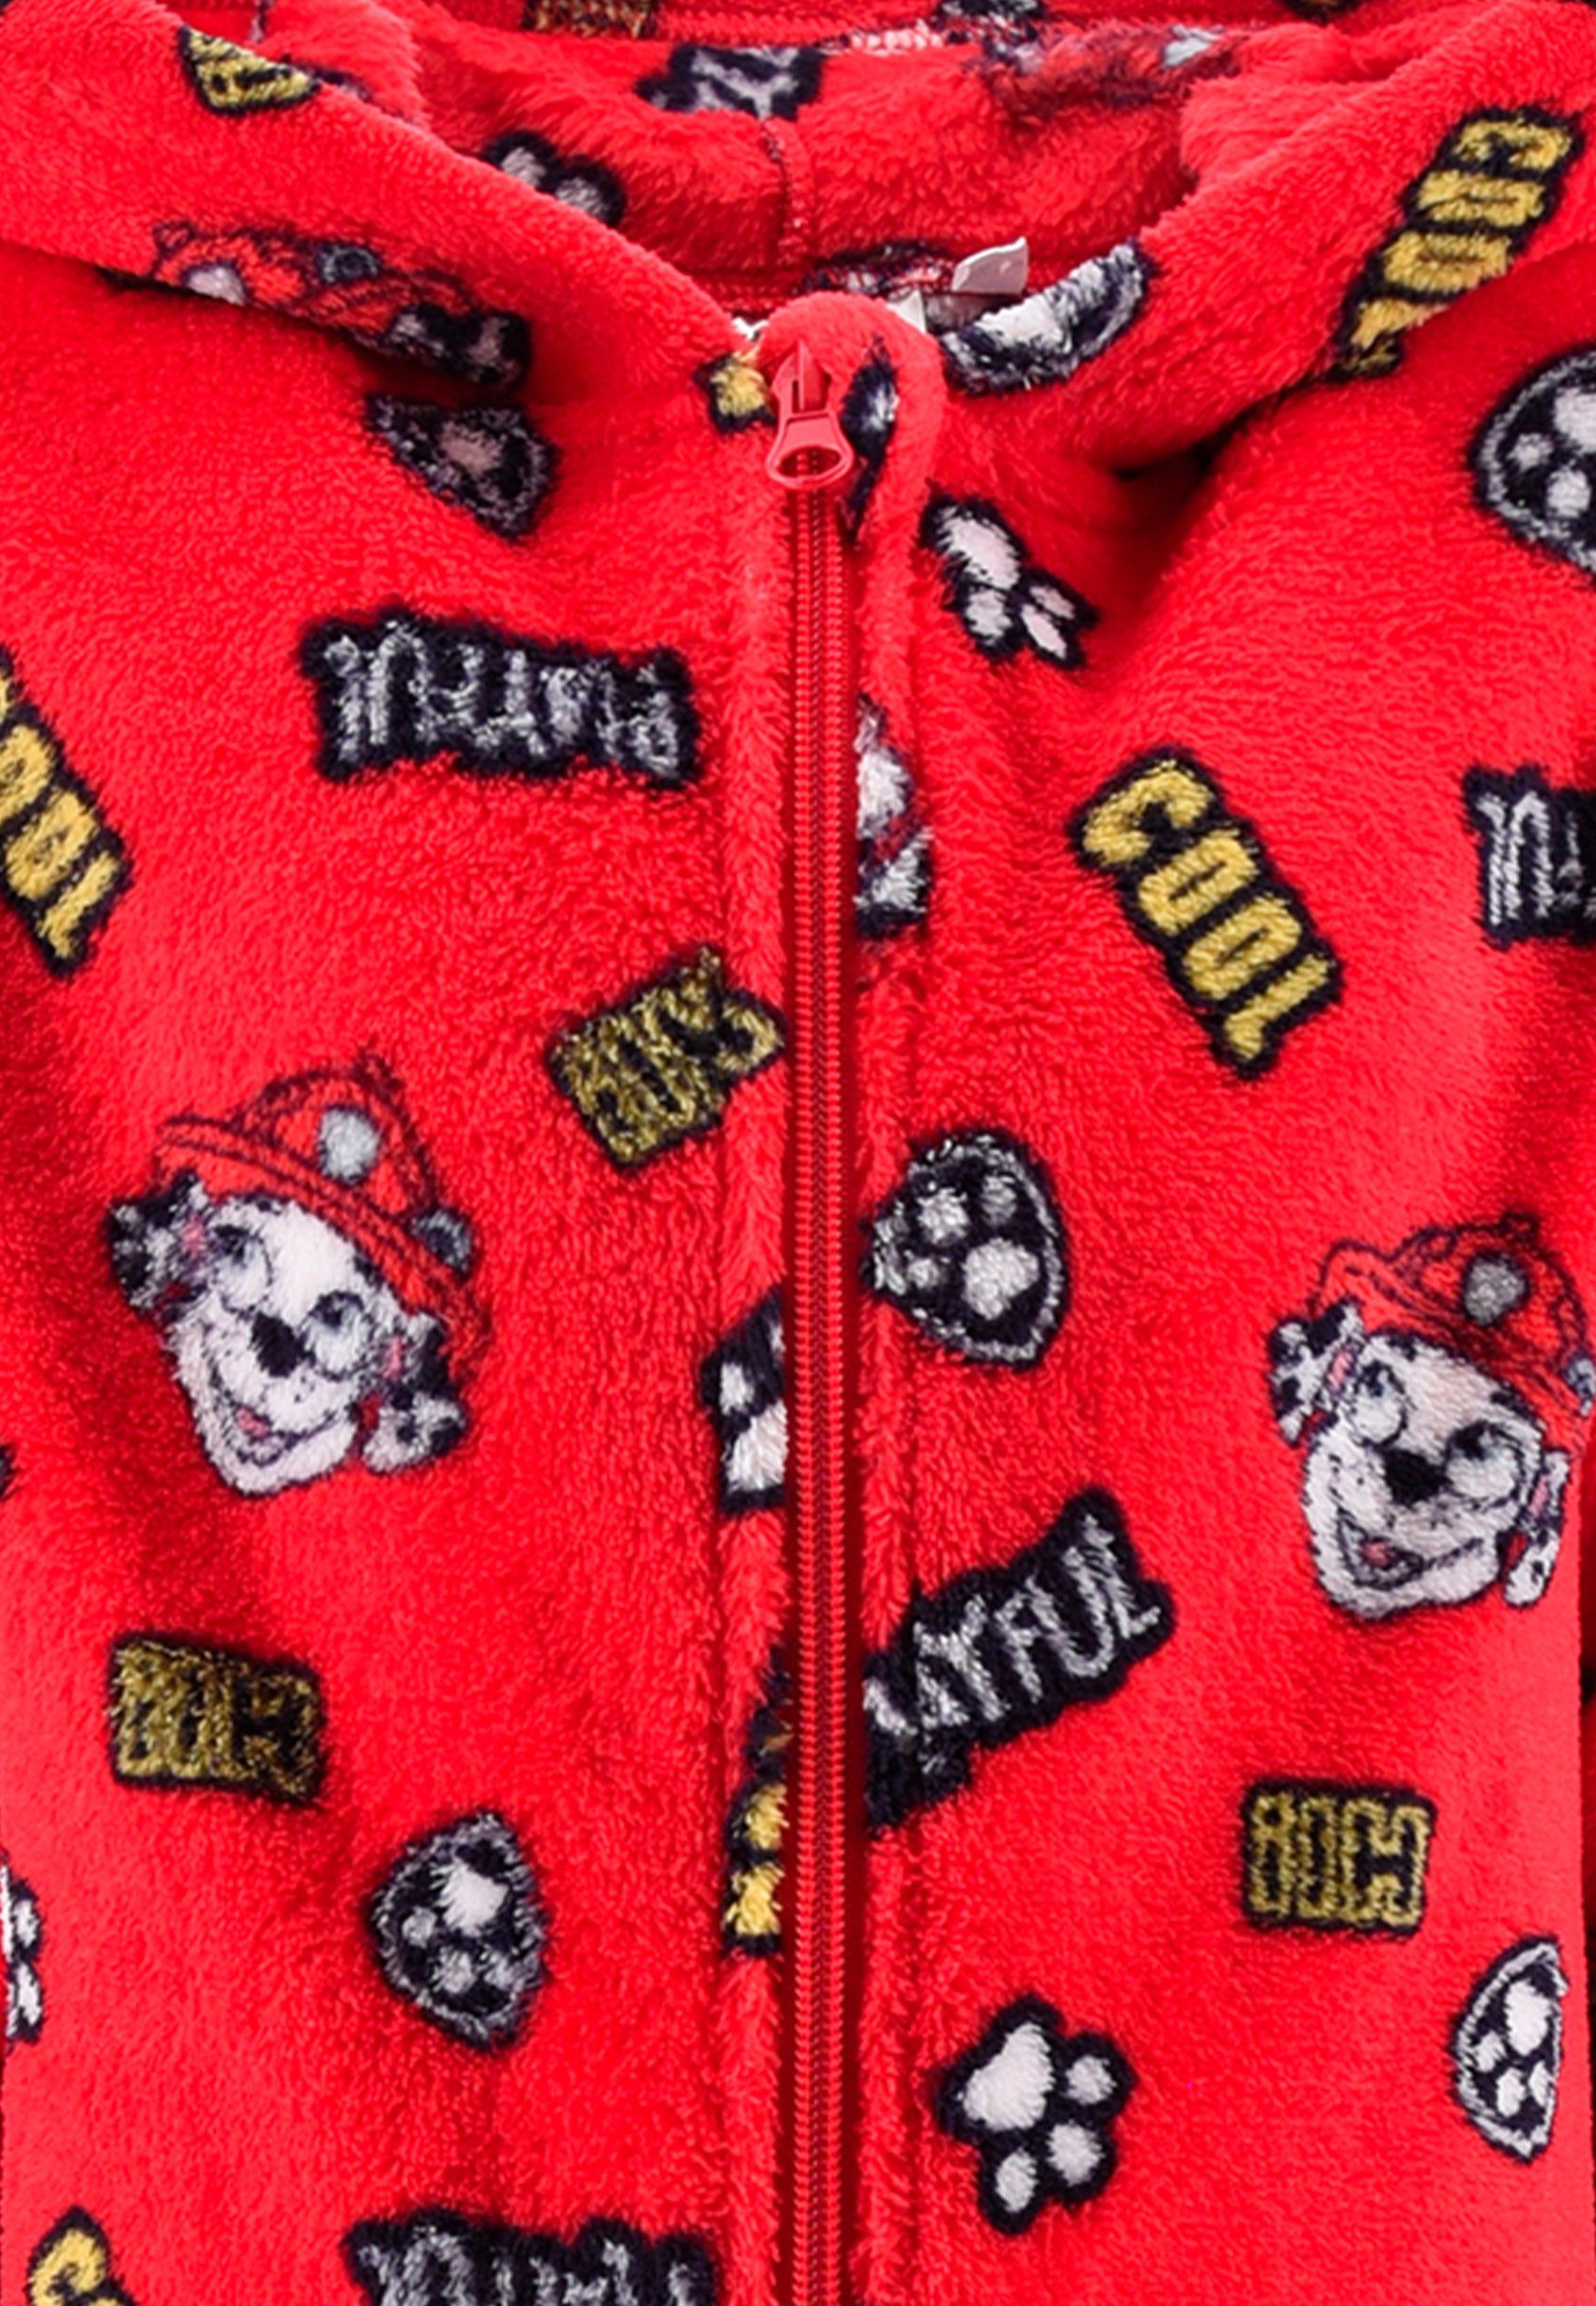 PAW PATROL Schlafanzug langarm Overall Pyjama Rot Schlafanzug Schlaf